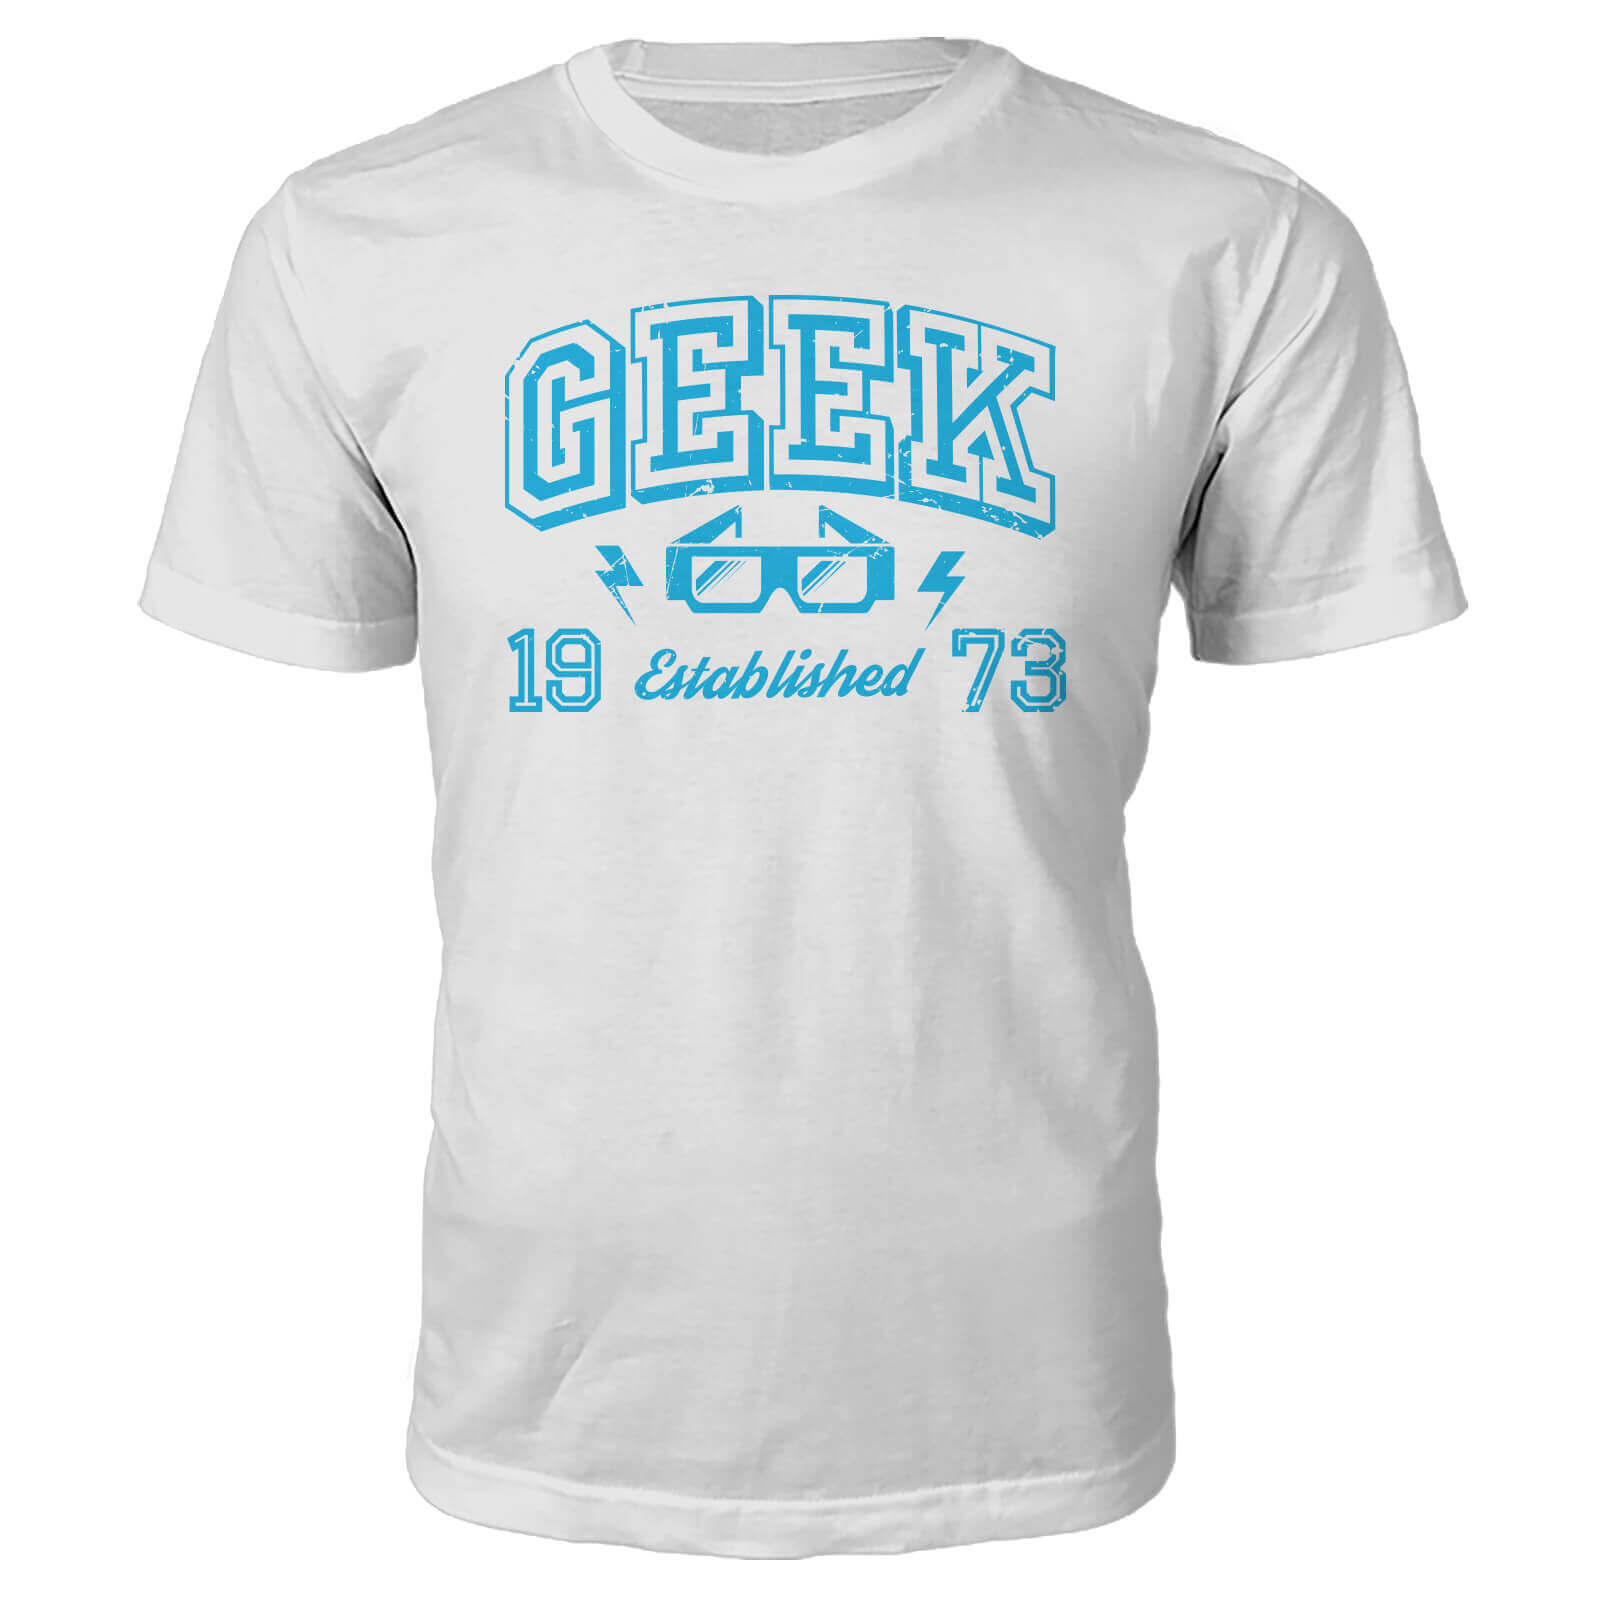 Geek Established 1970's T-Shirt- White - XL - 1973